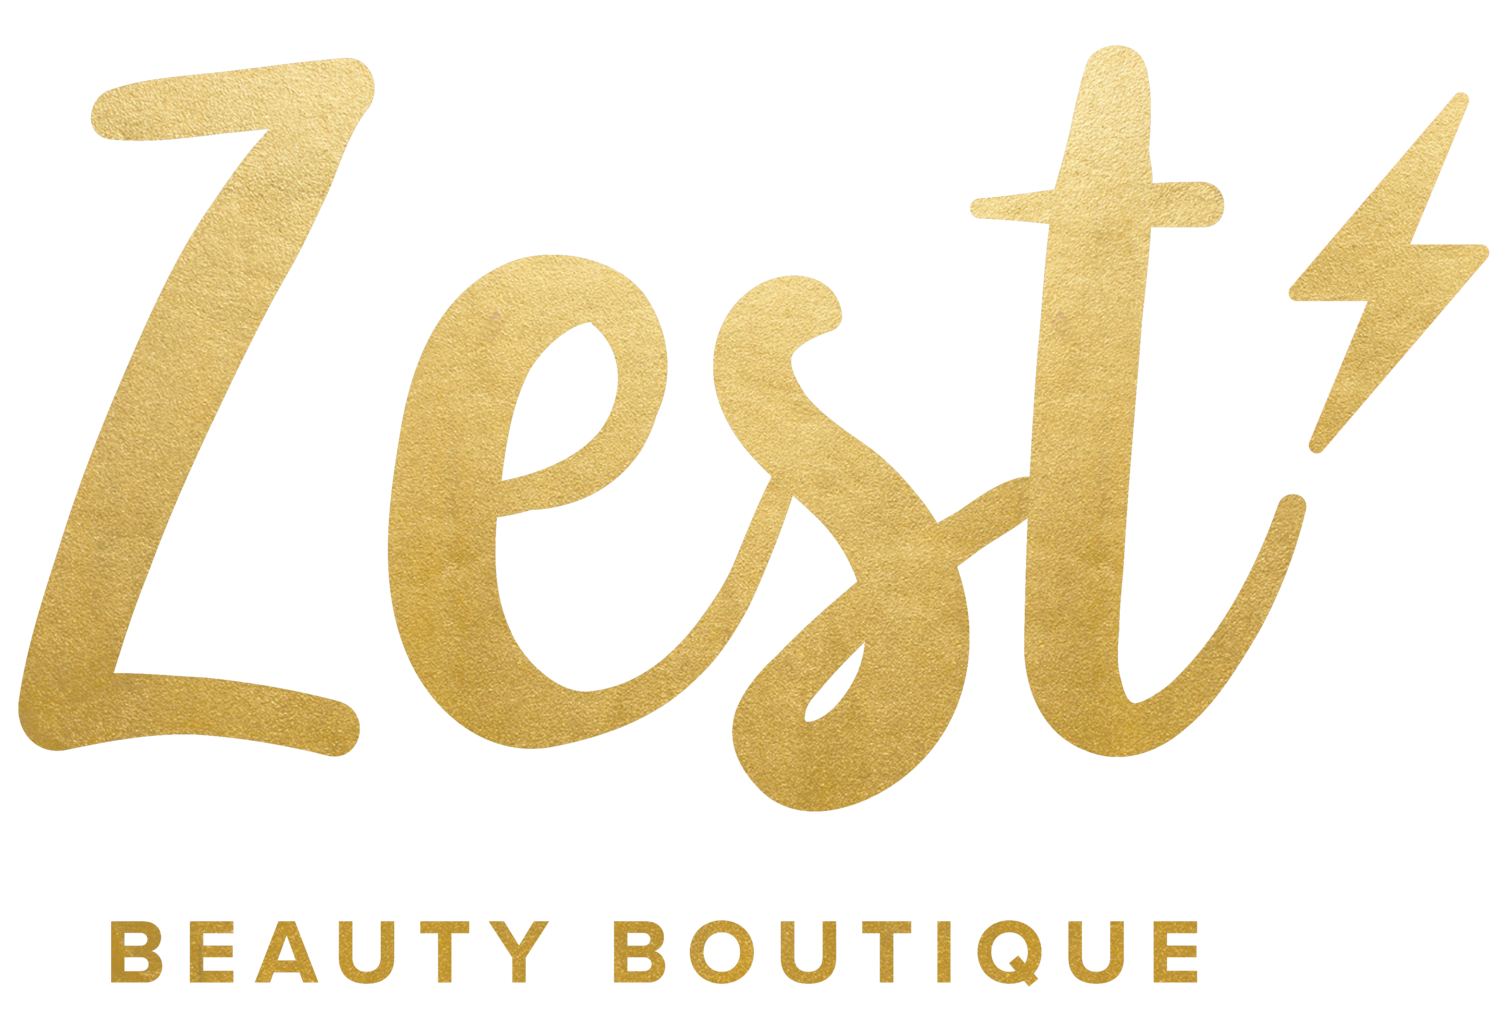 Zest Beauty Boutique // Non-invasive face and body treatments.